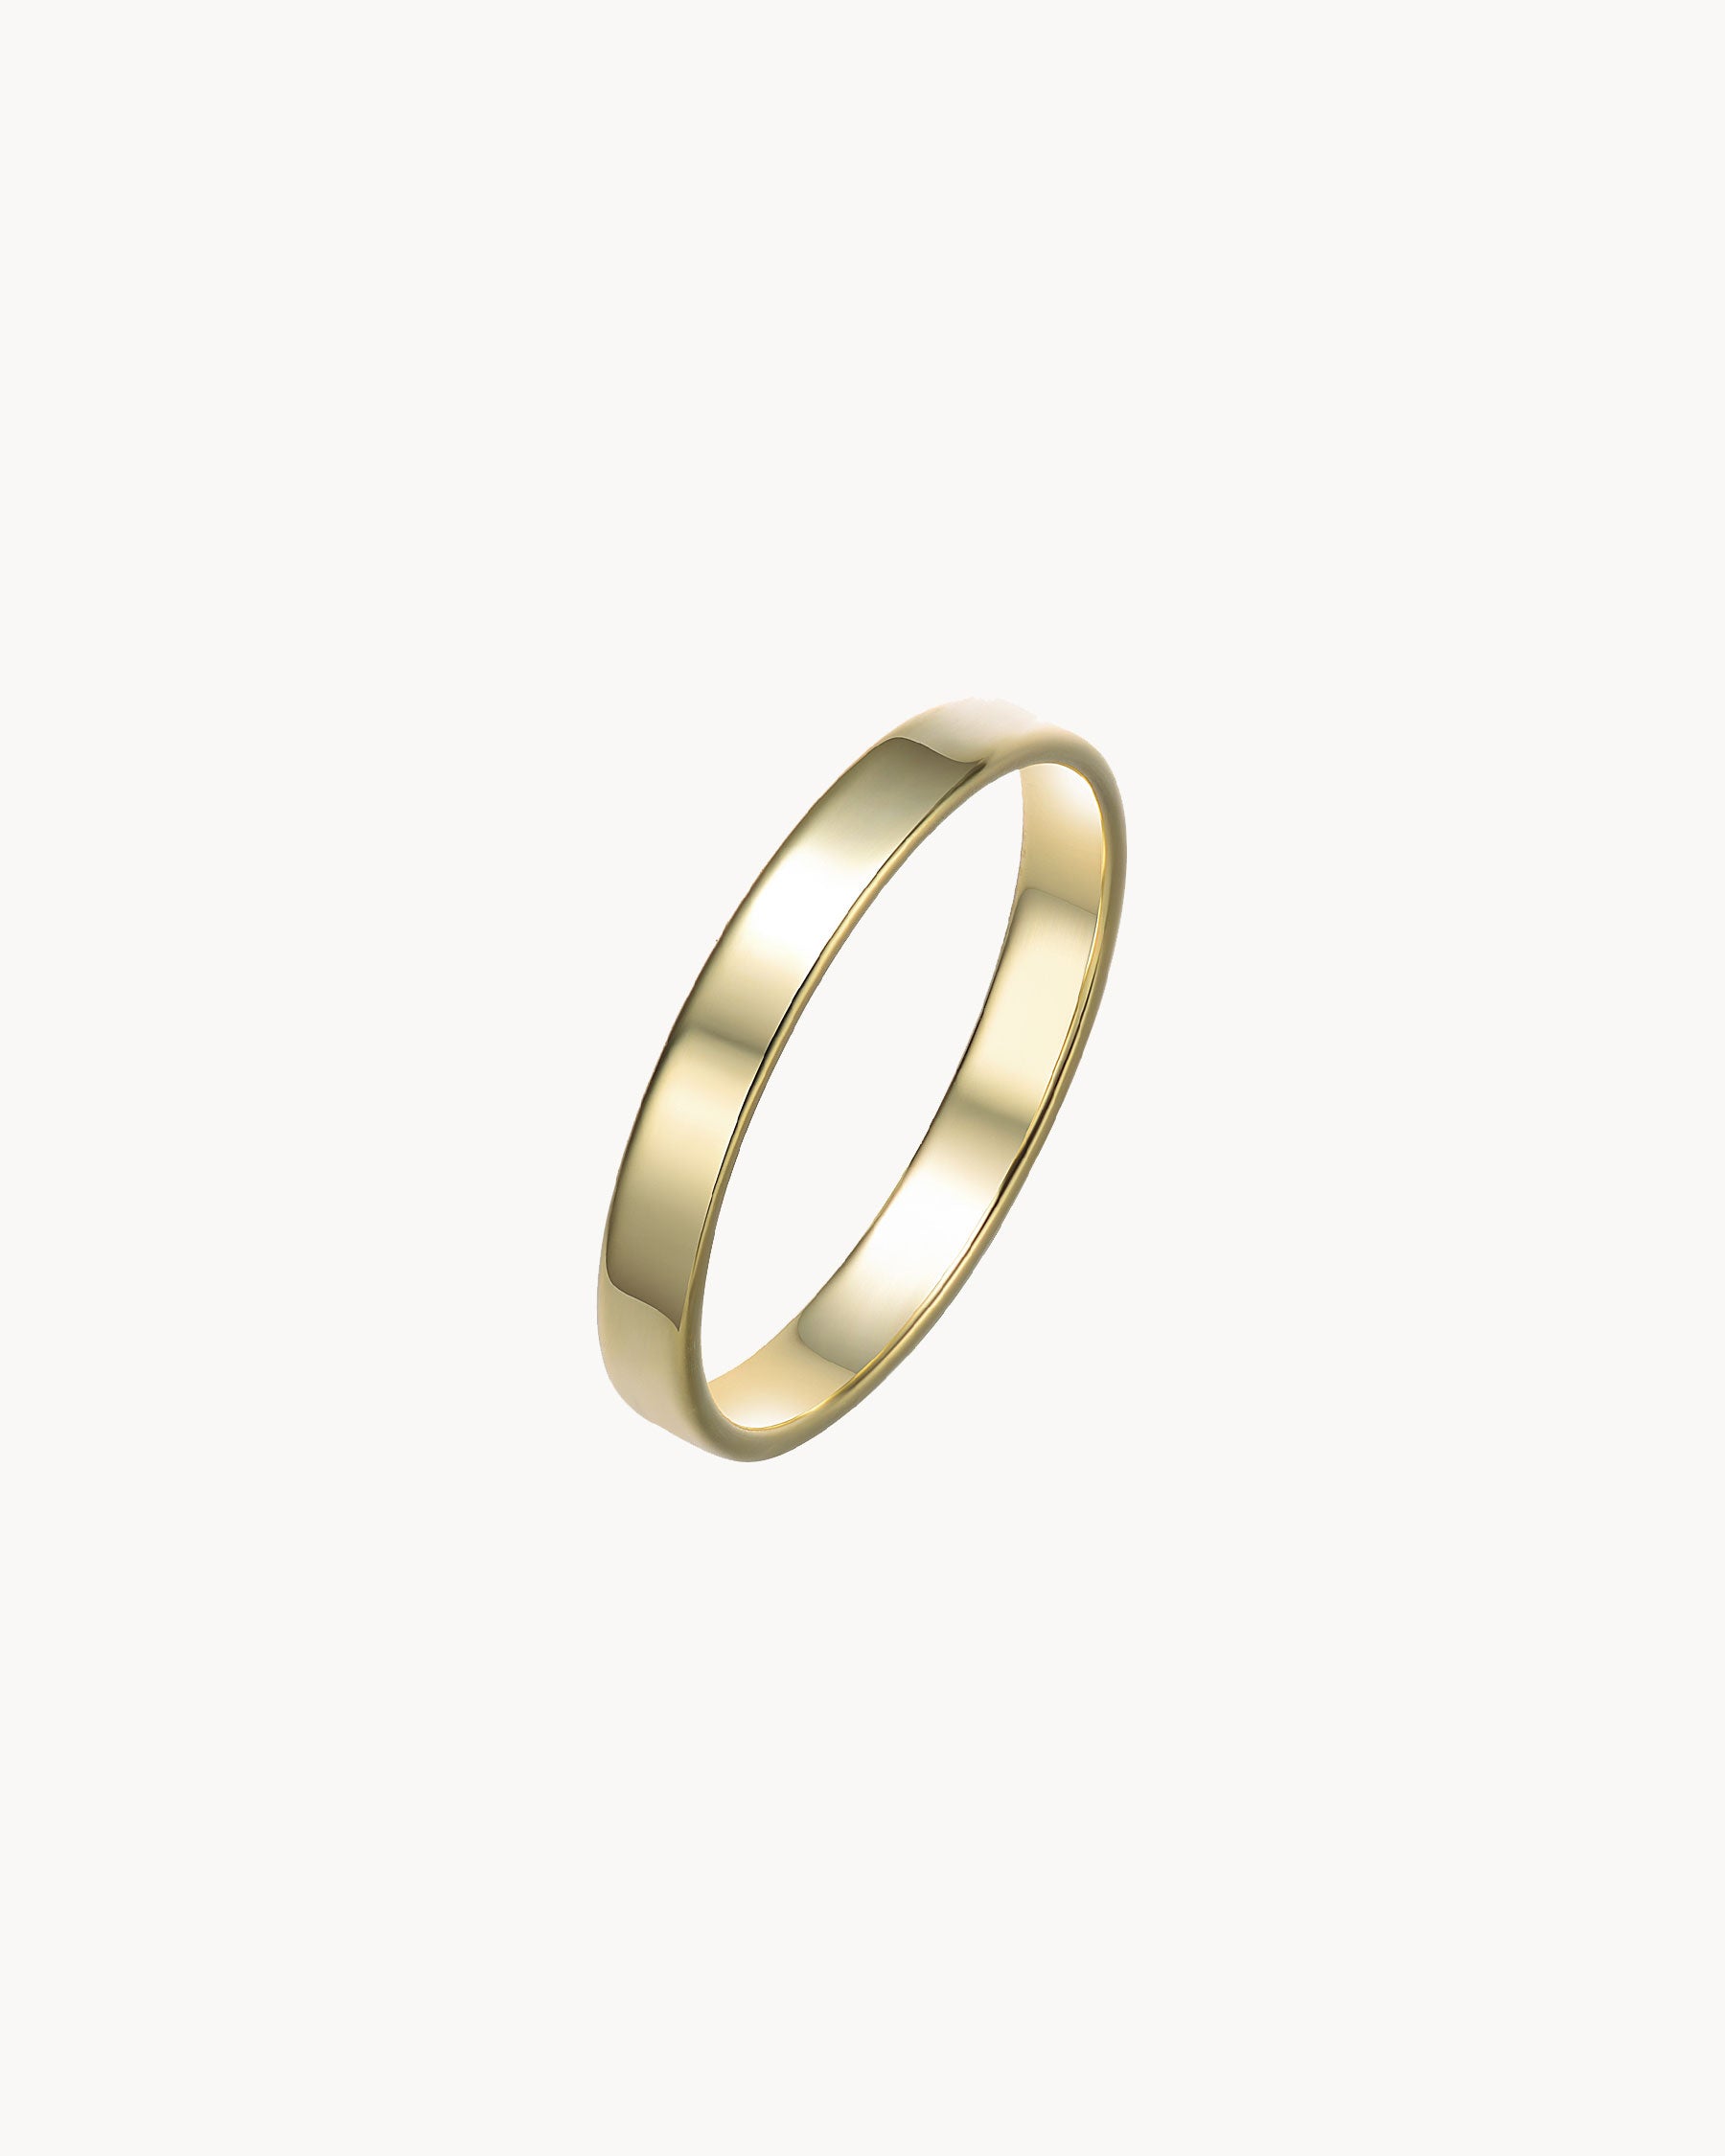 Wedding Flat Band Ring 2mm | The Gray Box